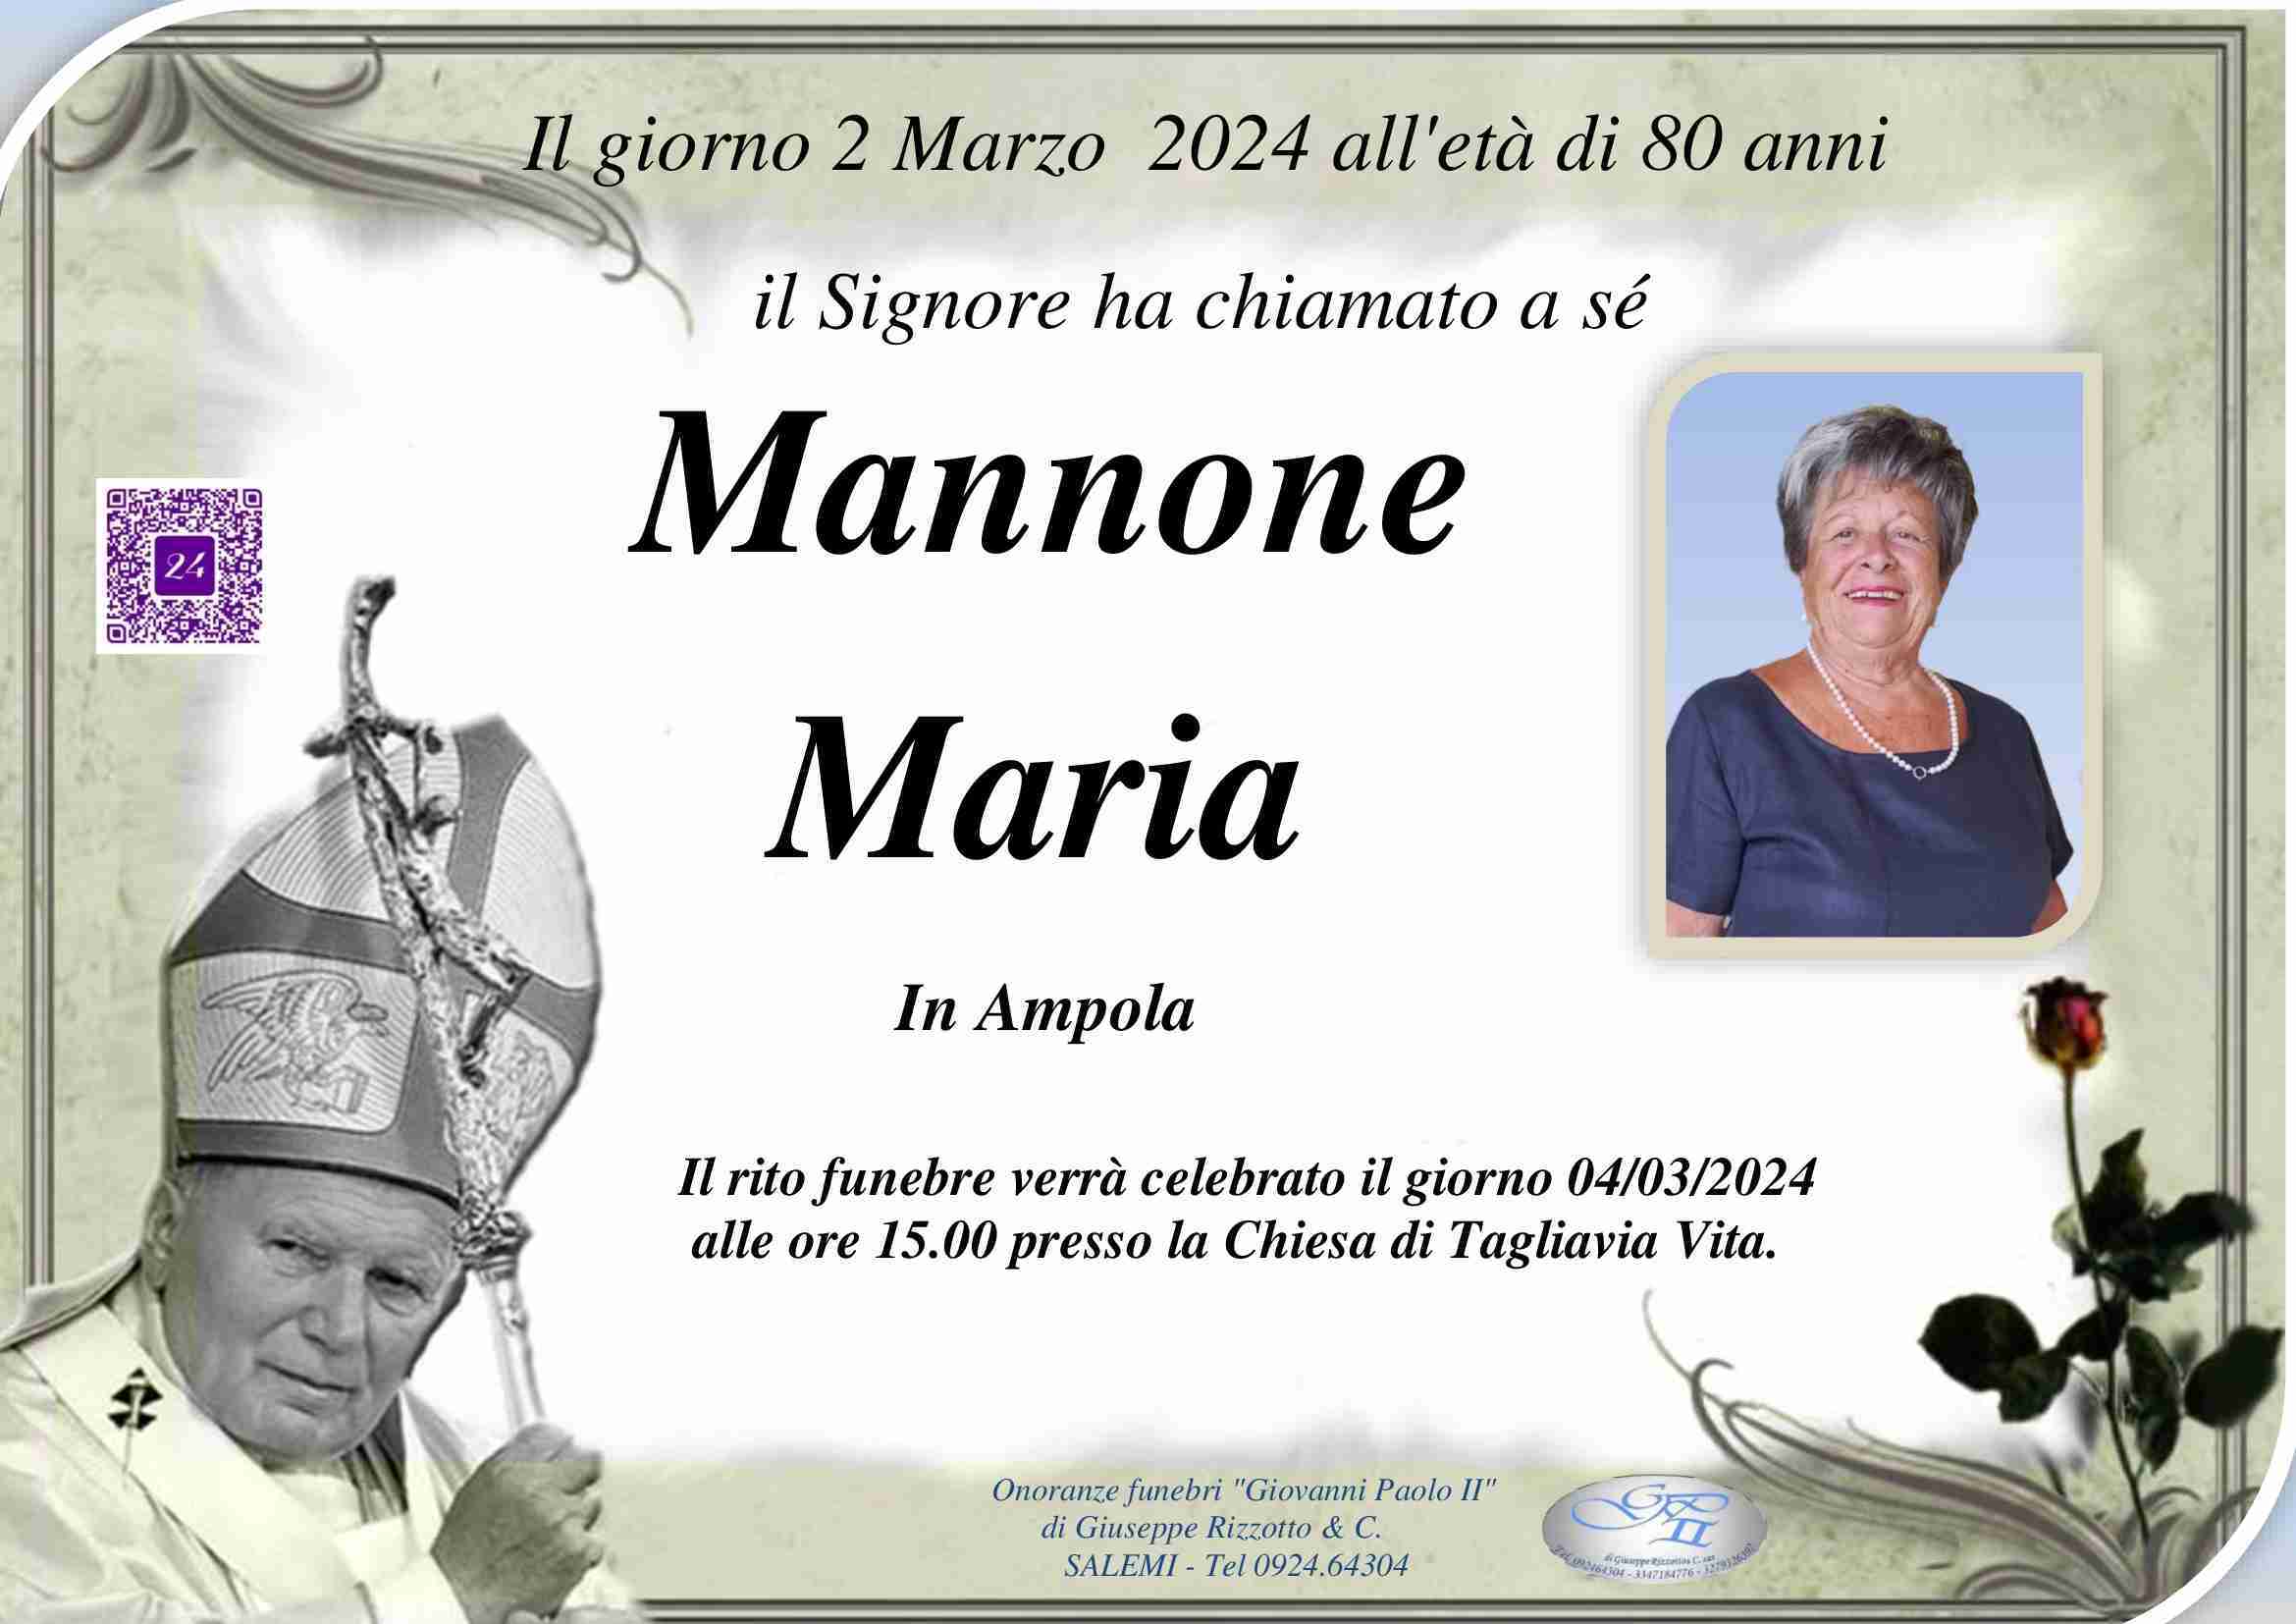 Maria Mannone